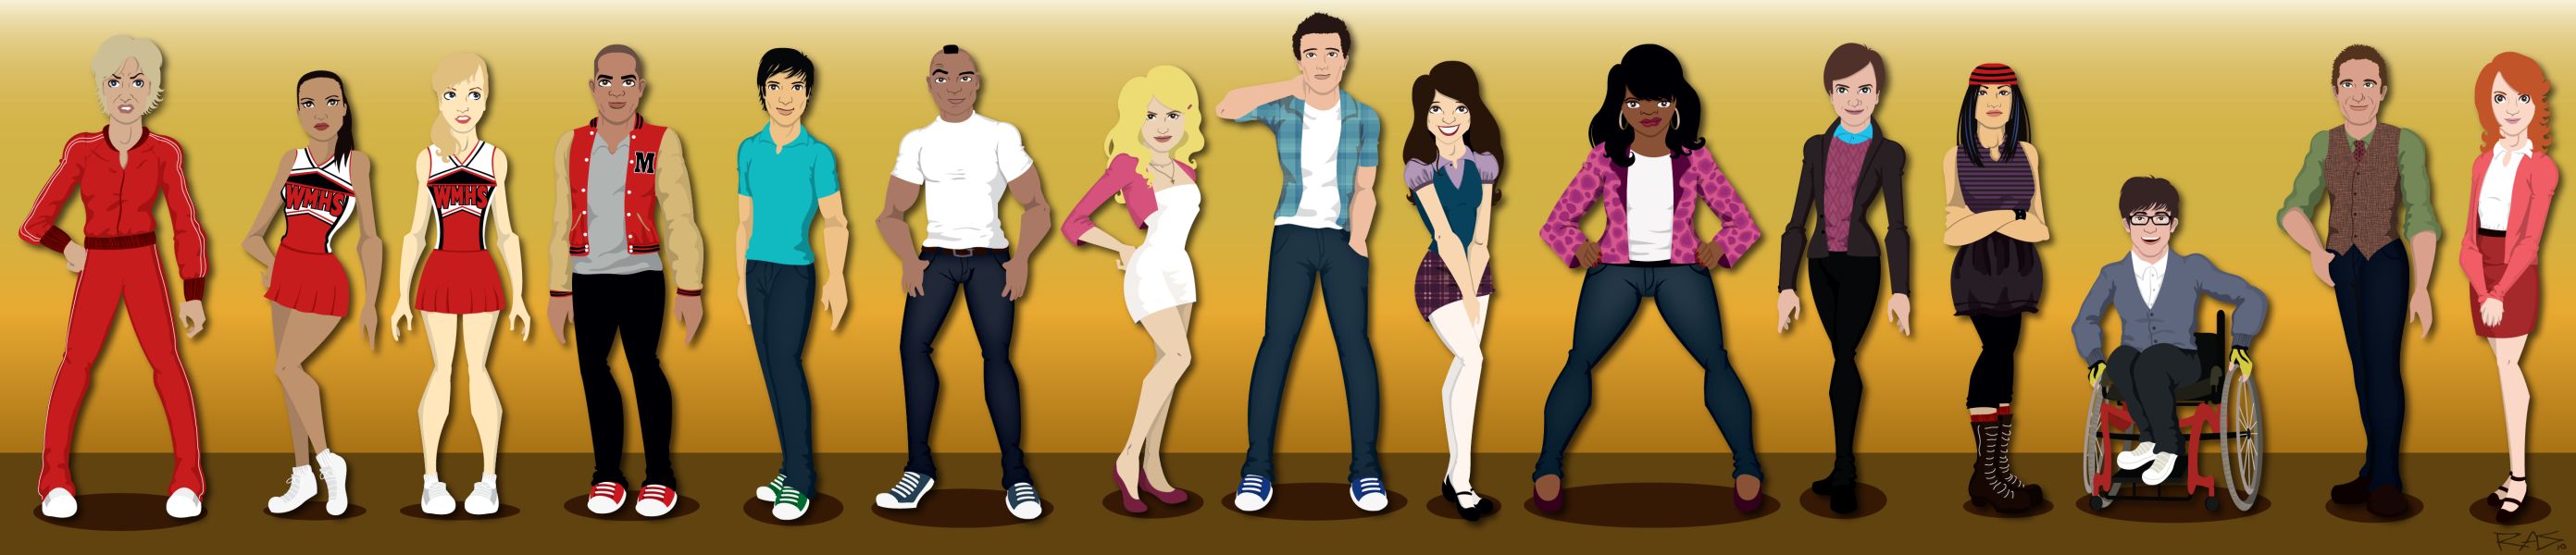 Glee Cast by RickytheRockstar